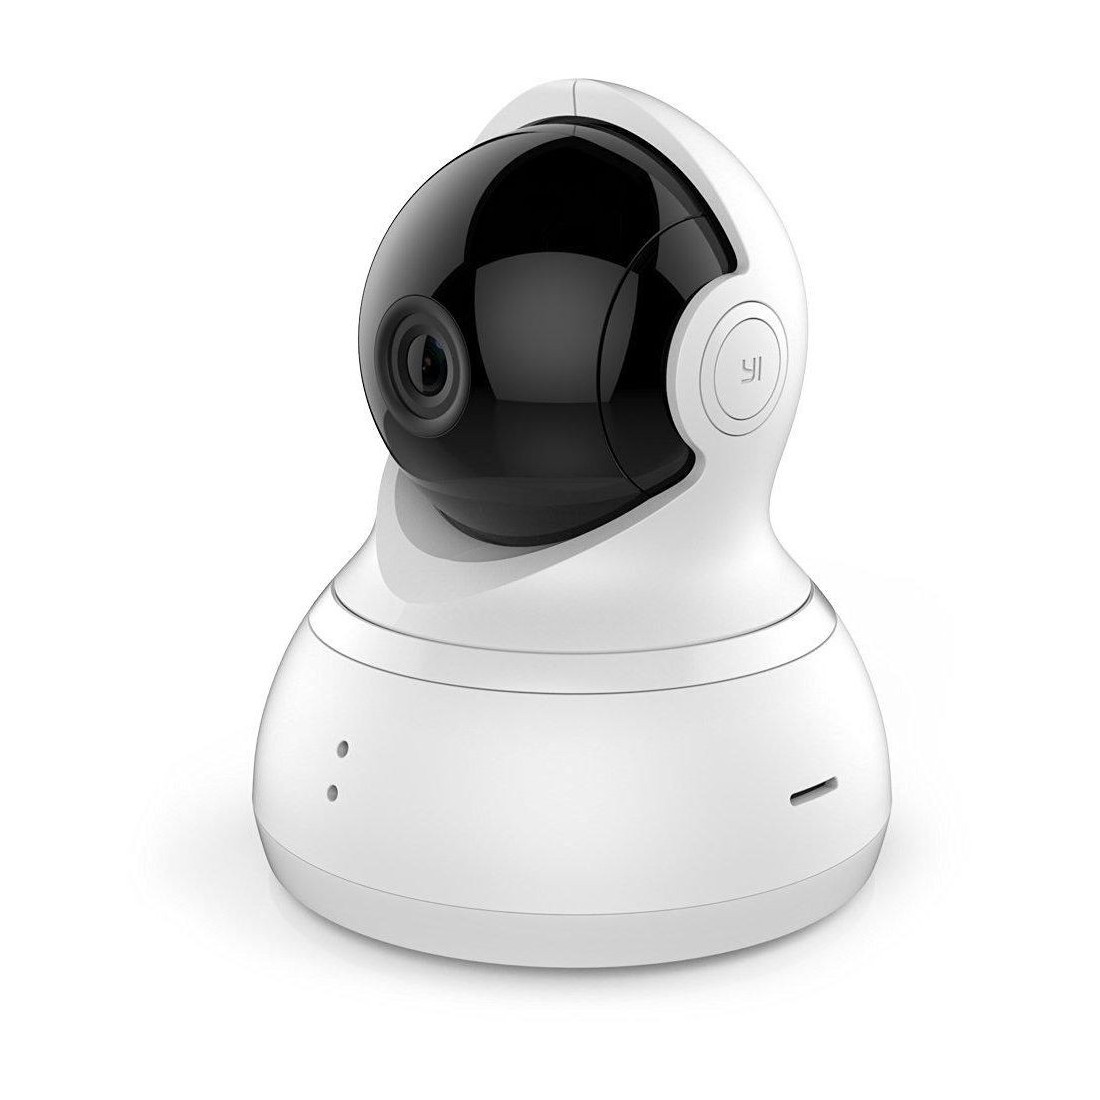 Xiaomi YI Dome Camera 1080p HD Wireless IP Security Surveillance Night Vision - Black/White